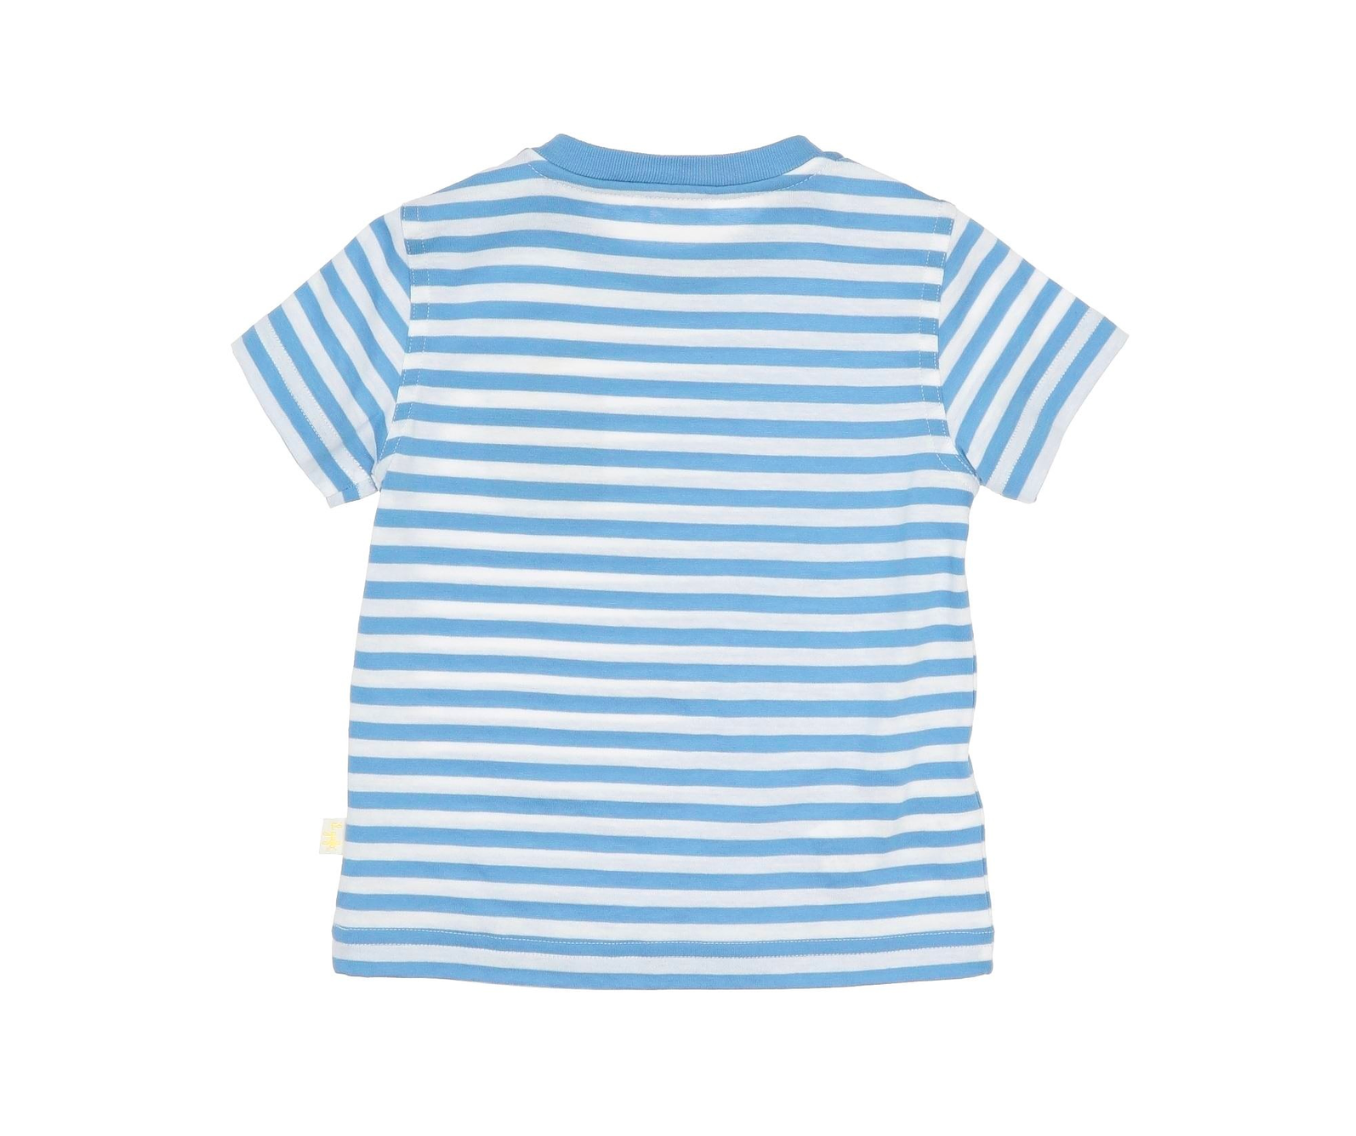 IL GUFO - Blue striped t-shirt - 1 year old